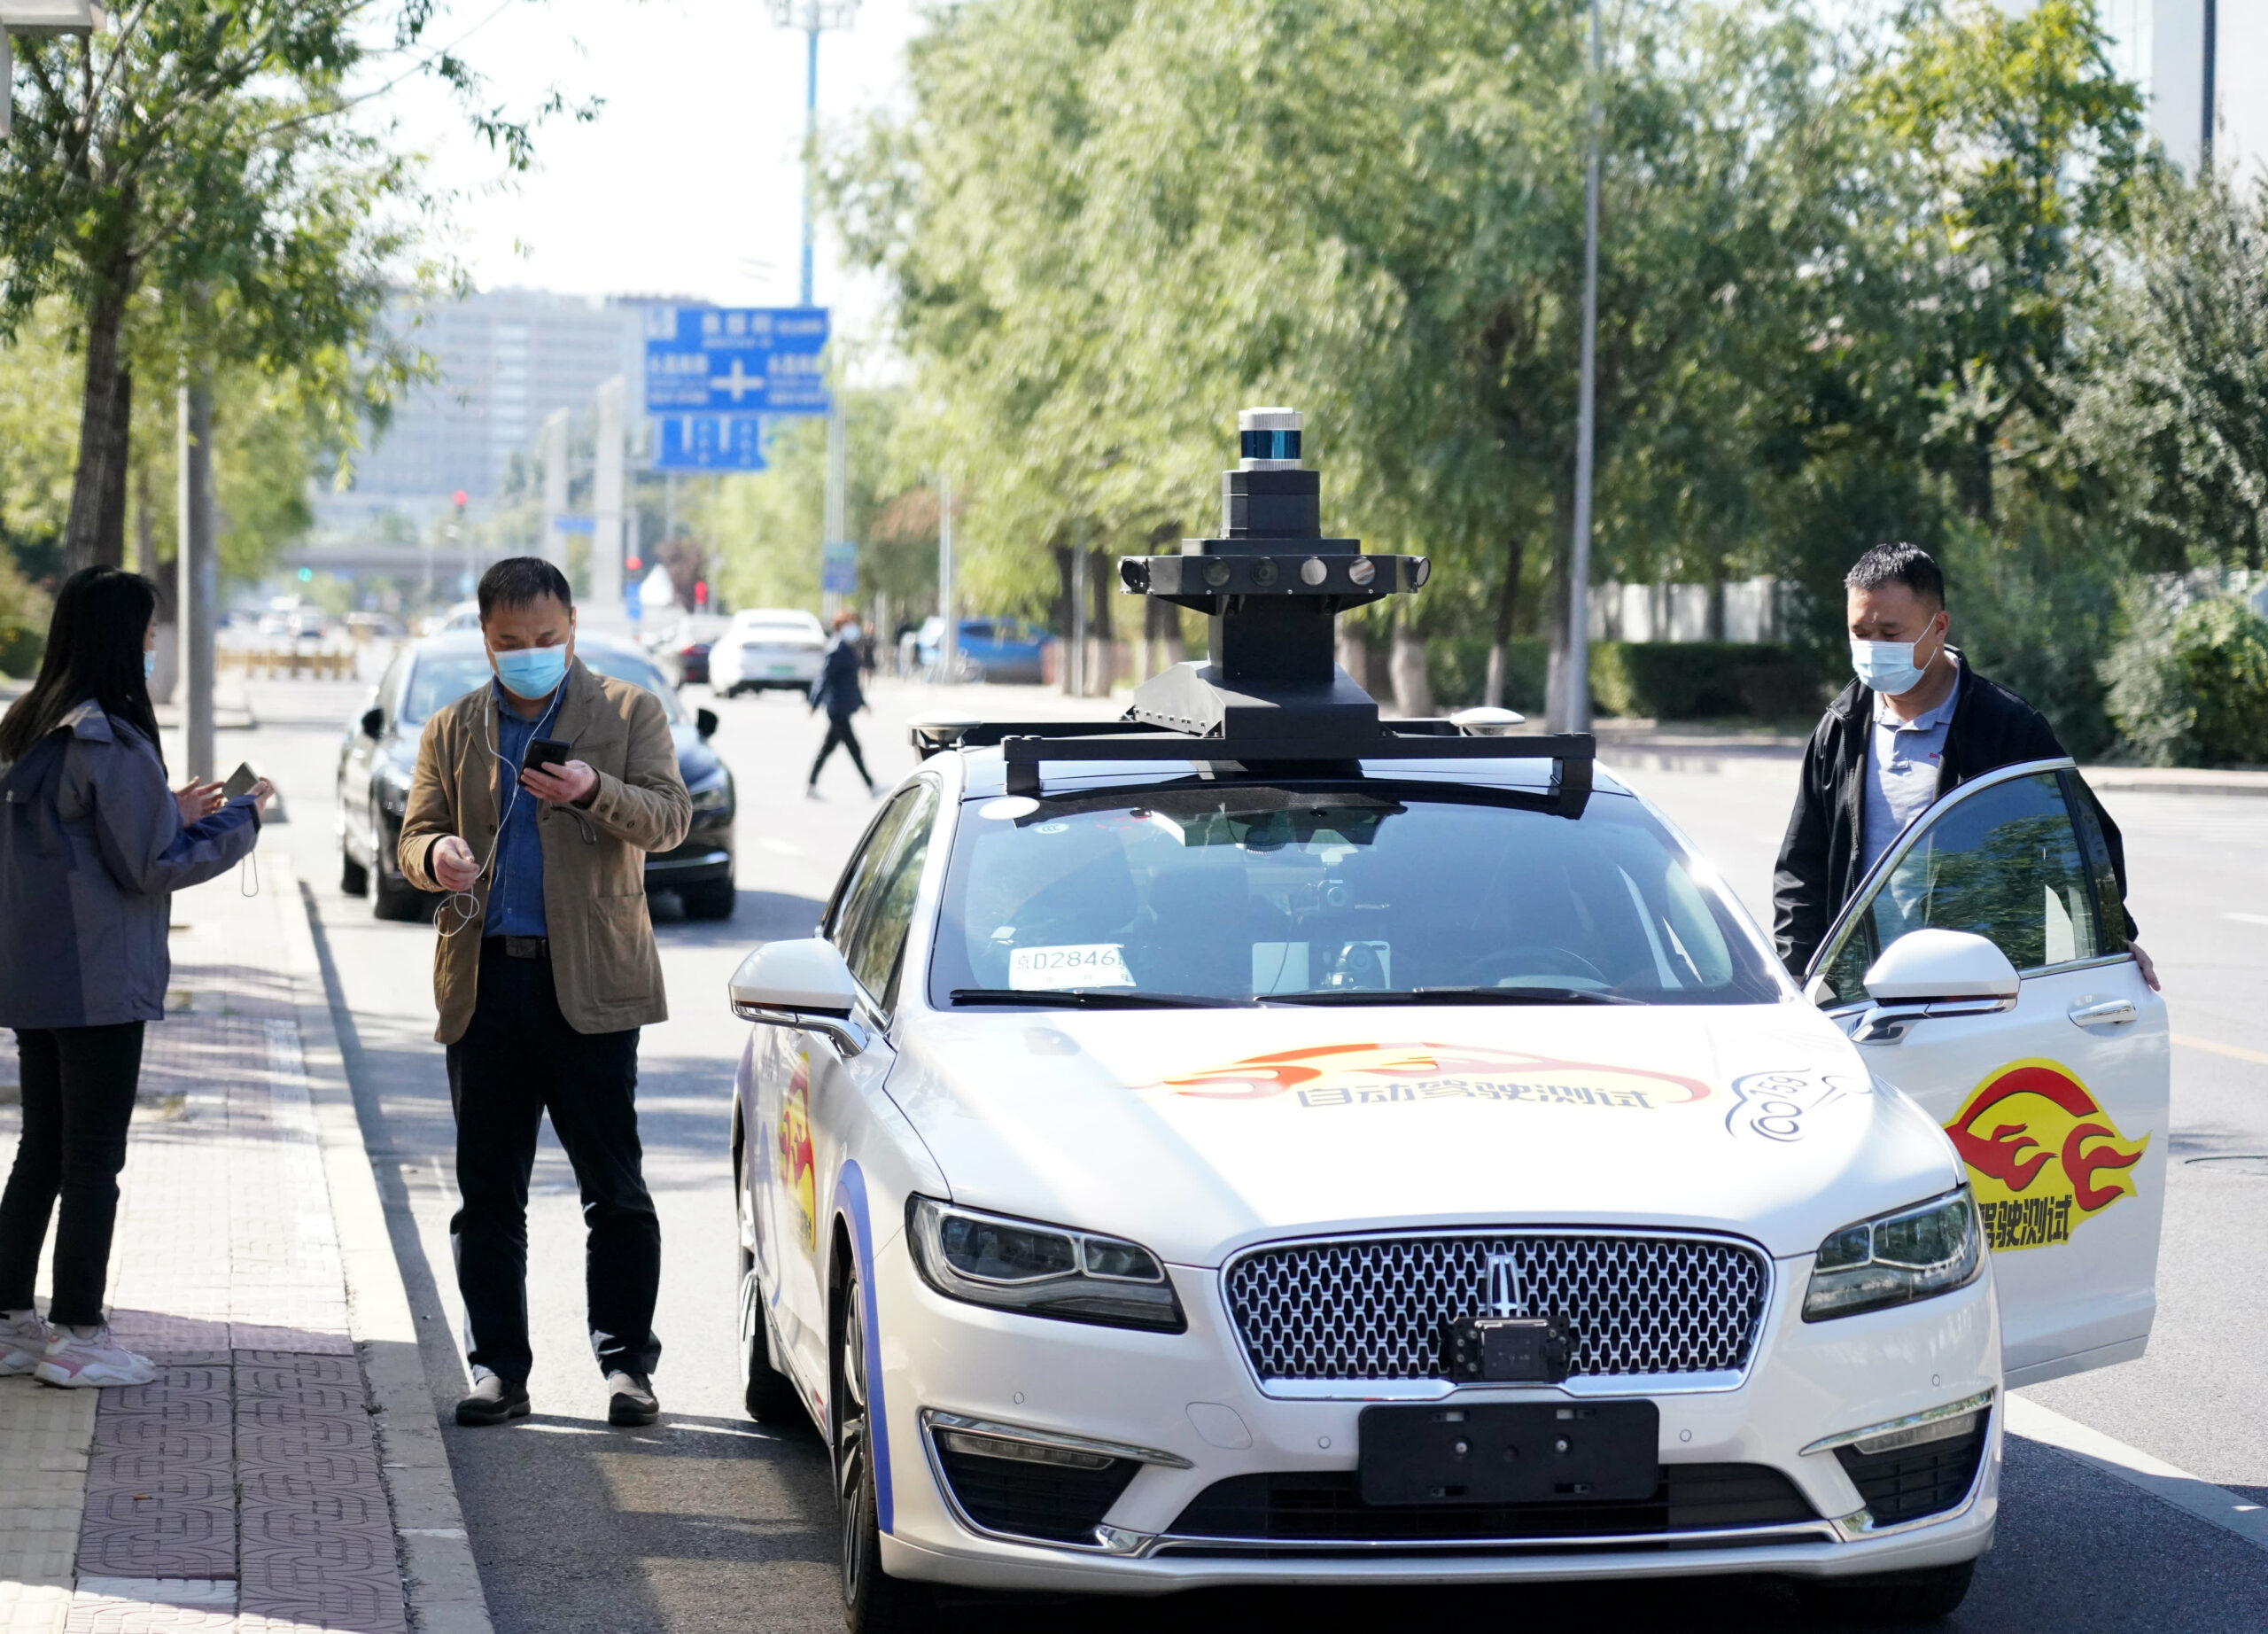 Baidu kicks off robotaxi business, after Beijing city’s fare approval